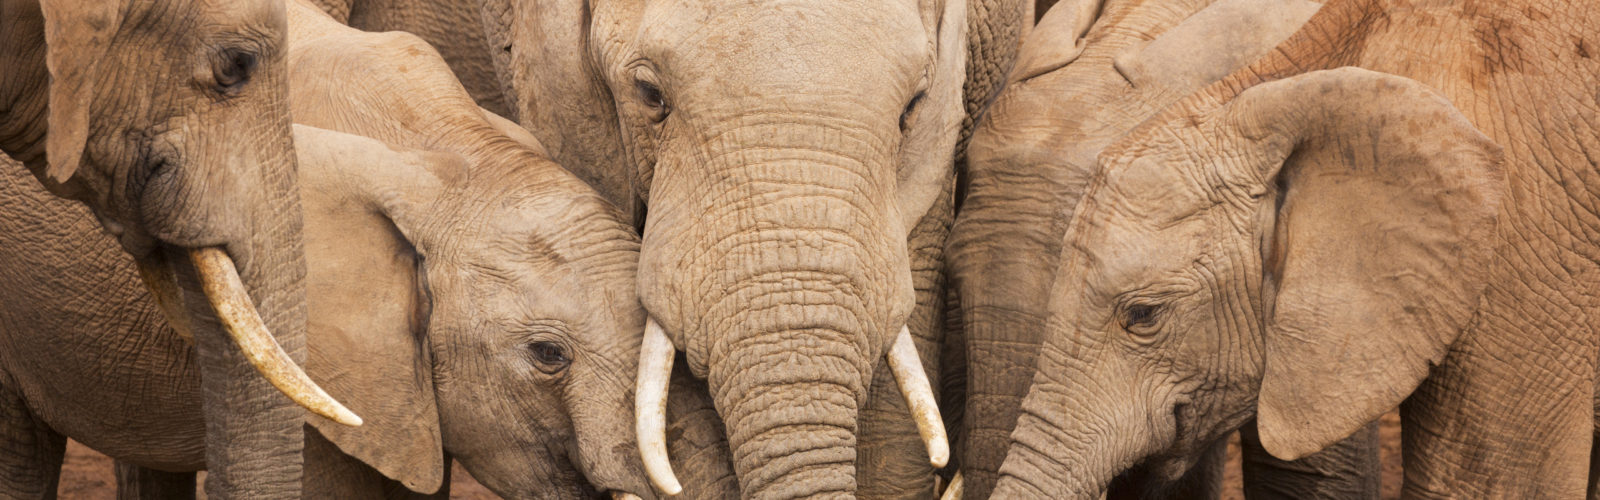 elephants-south-africa